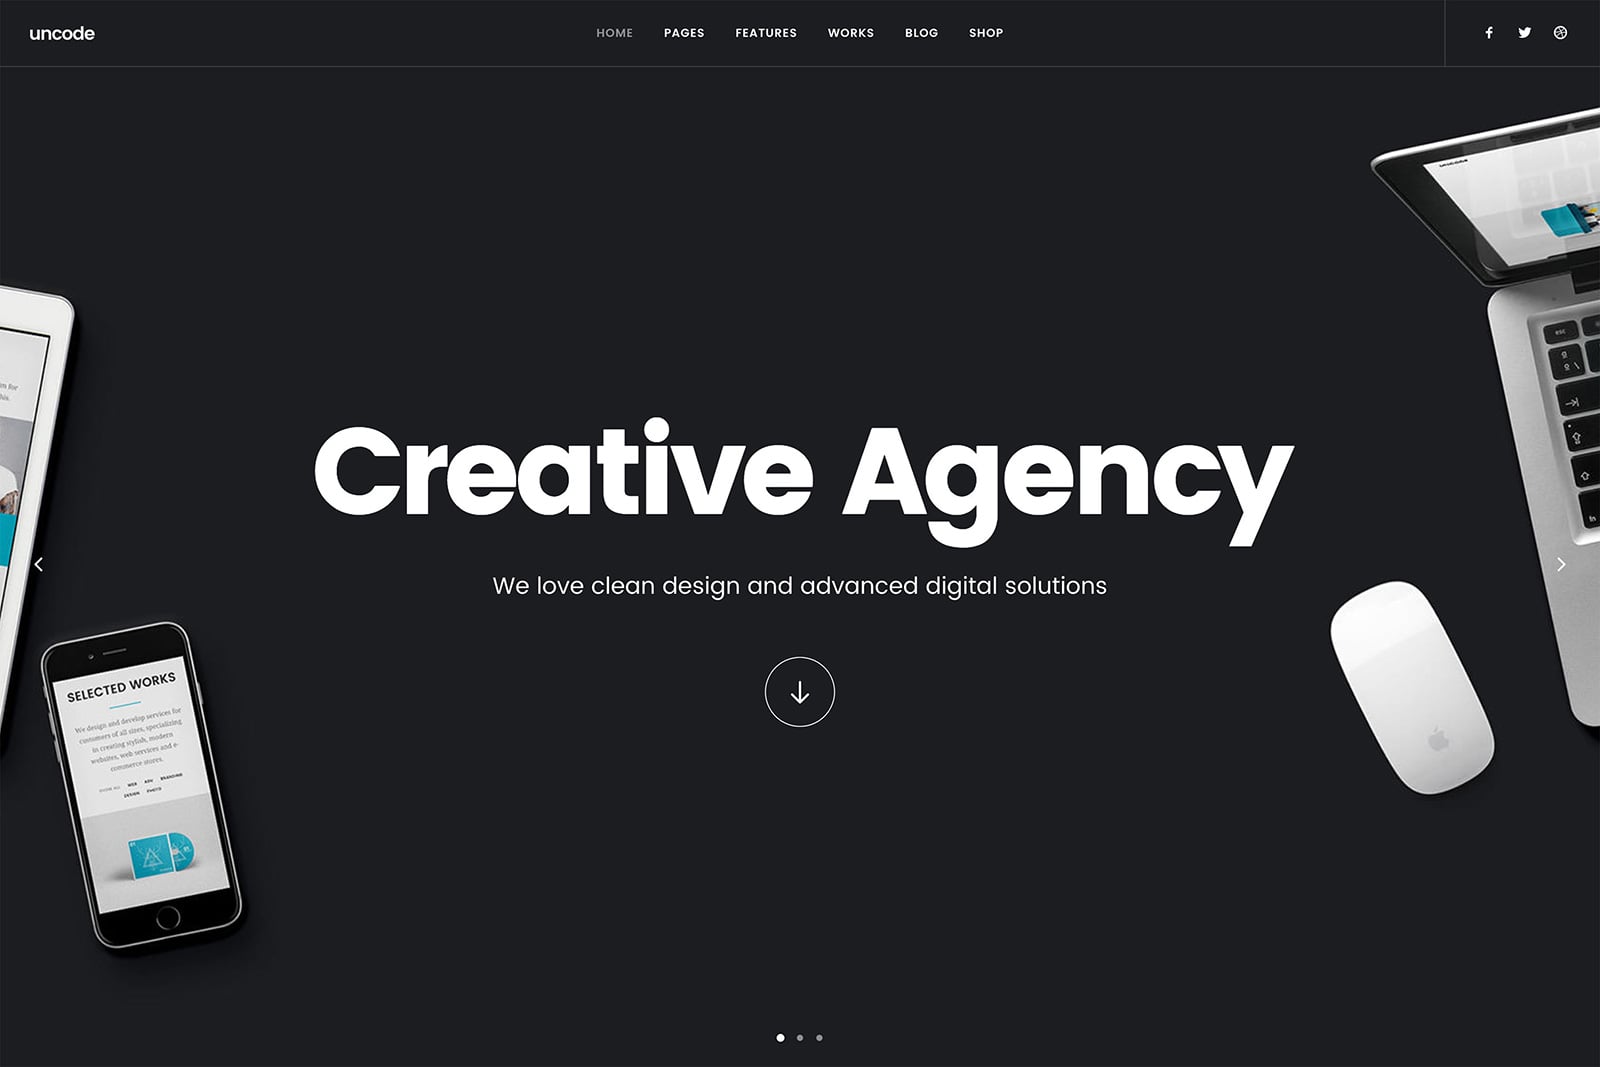 Creative Agency - Uncode